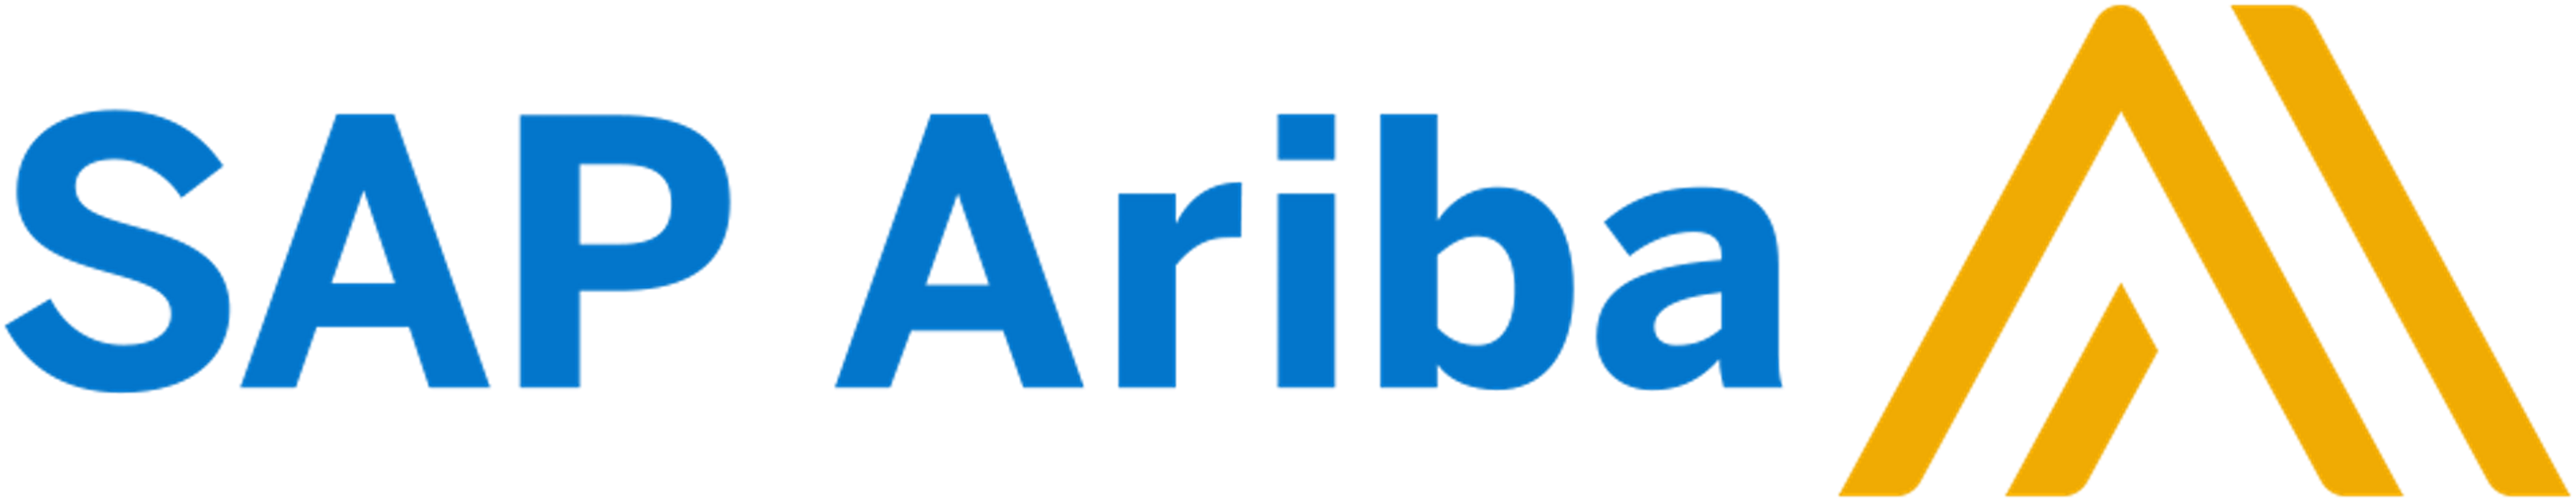 SAP Ariba Logo - How SAP Ariba educates and enables digital transformation through ...